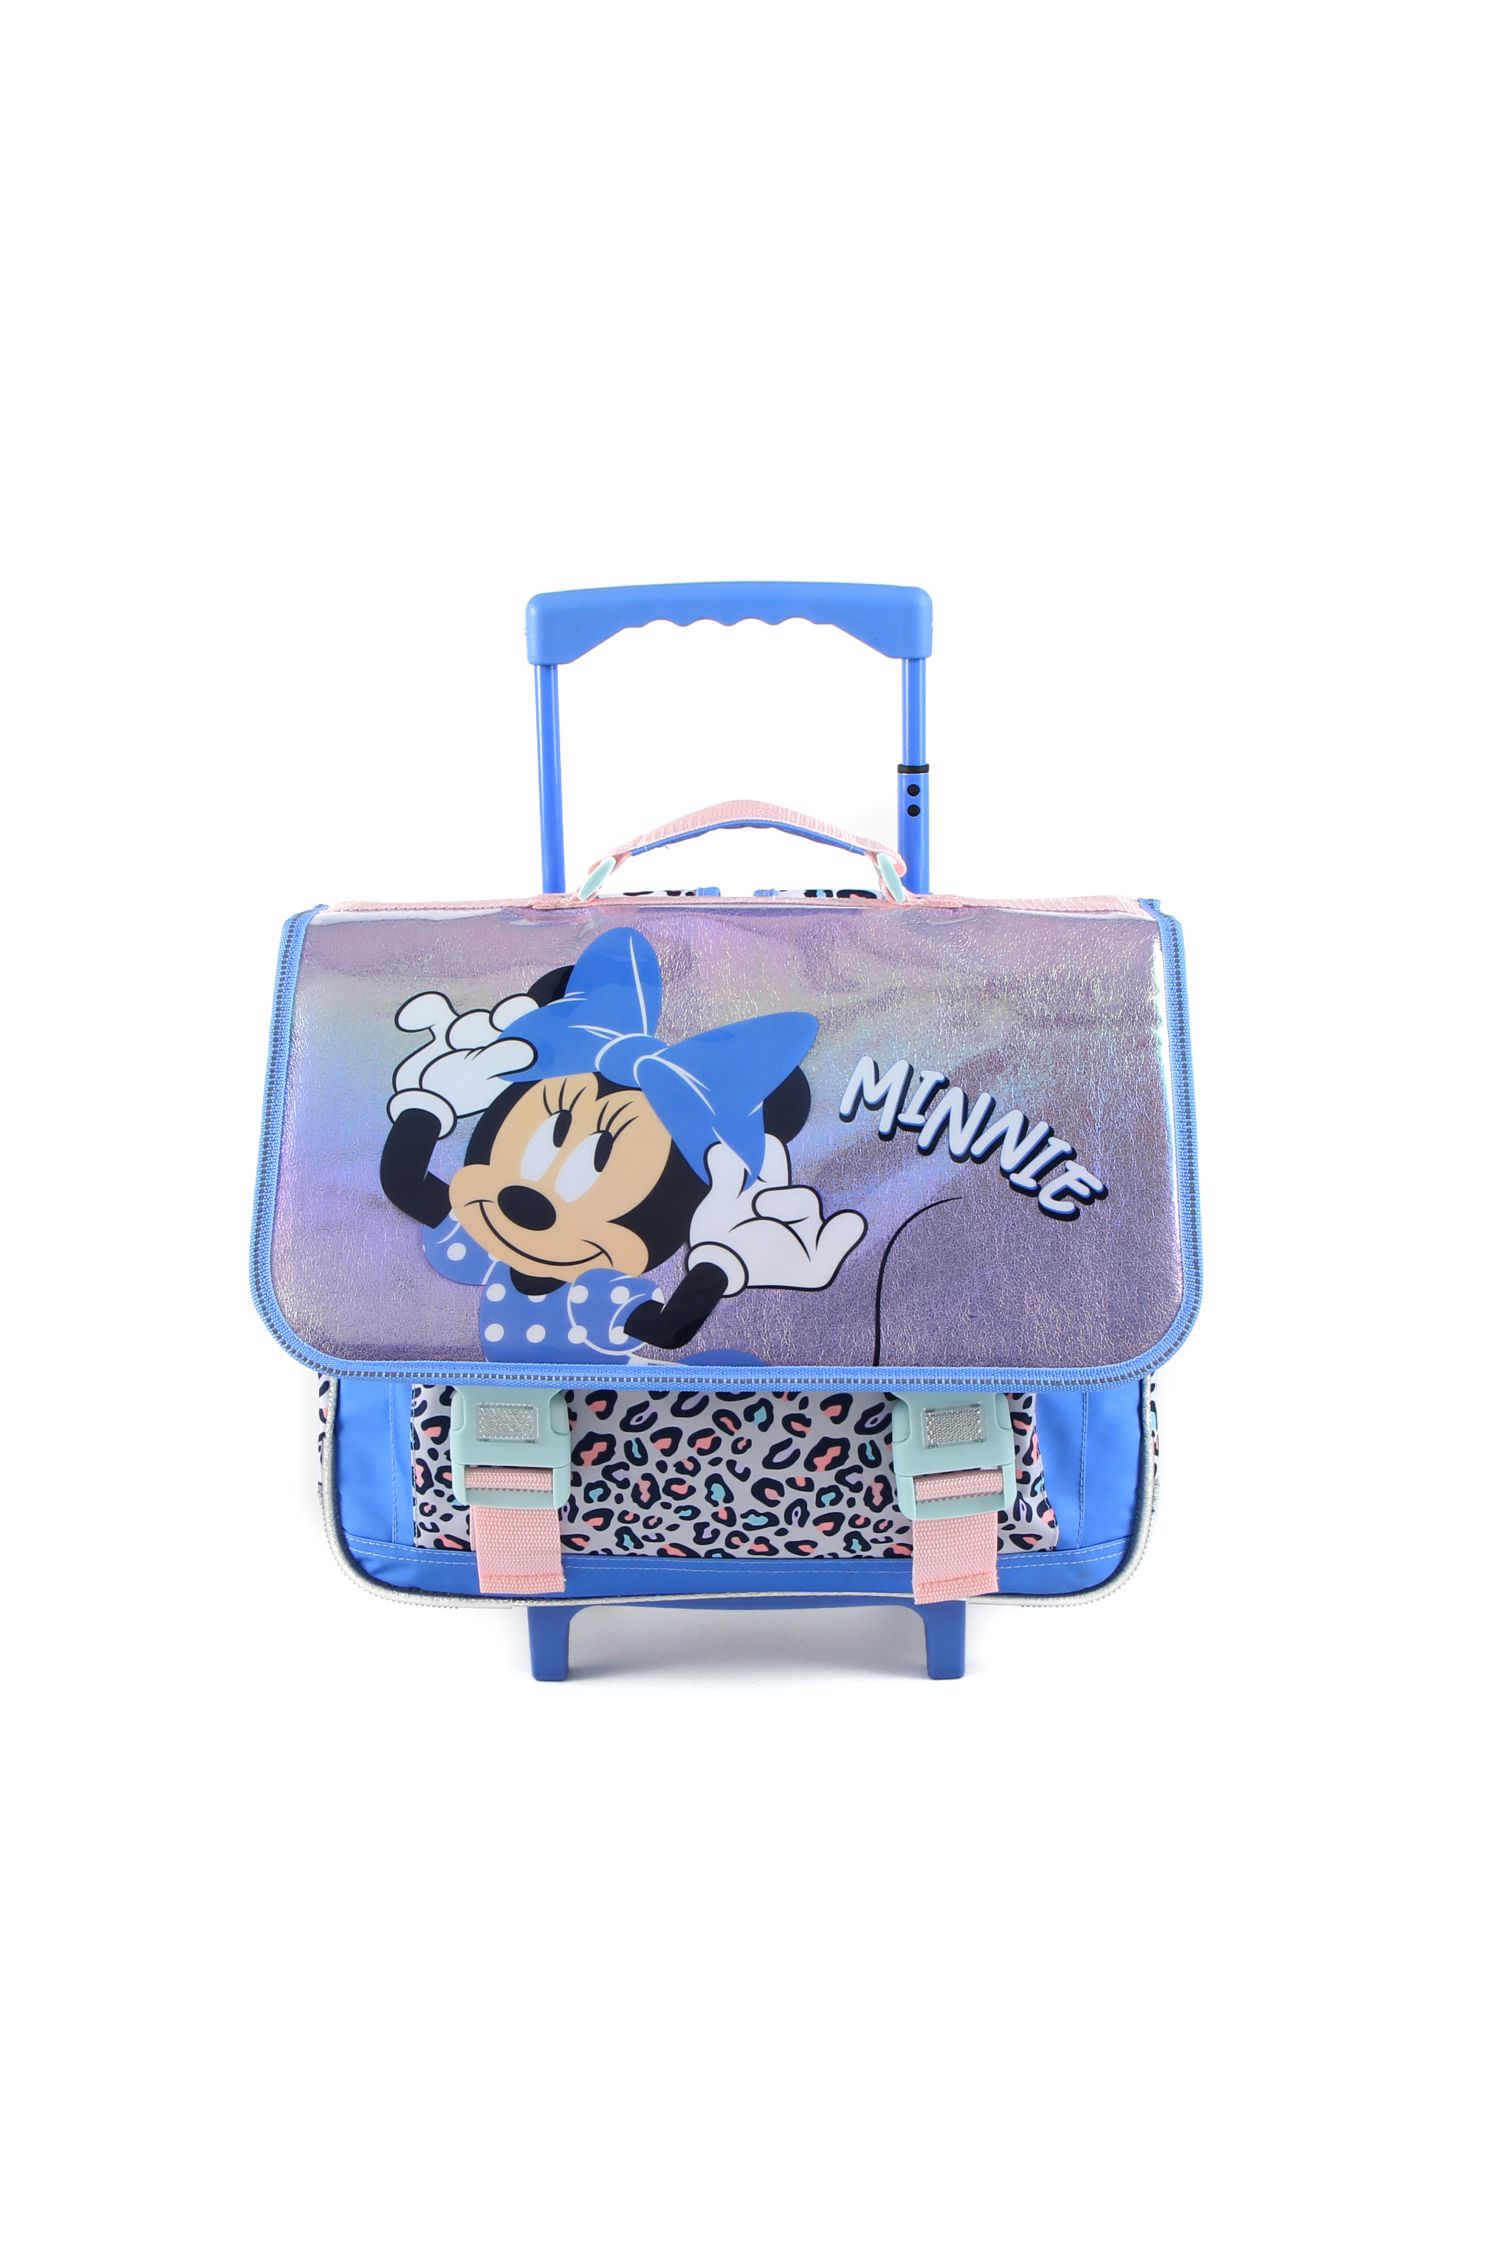 Рюкзак Disney Minnie Mouse Schulranzen Rädern Minnie Leopard 41cm Trolley, синий фотографии